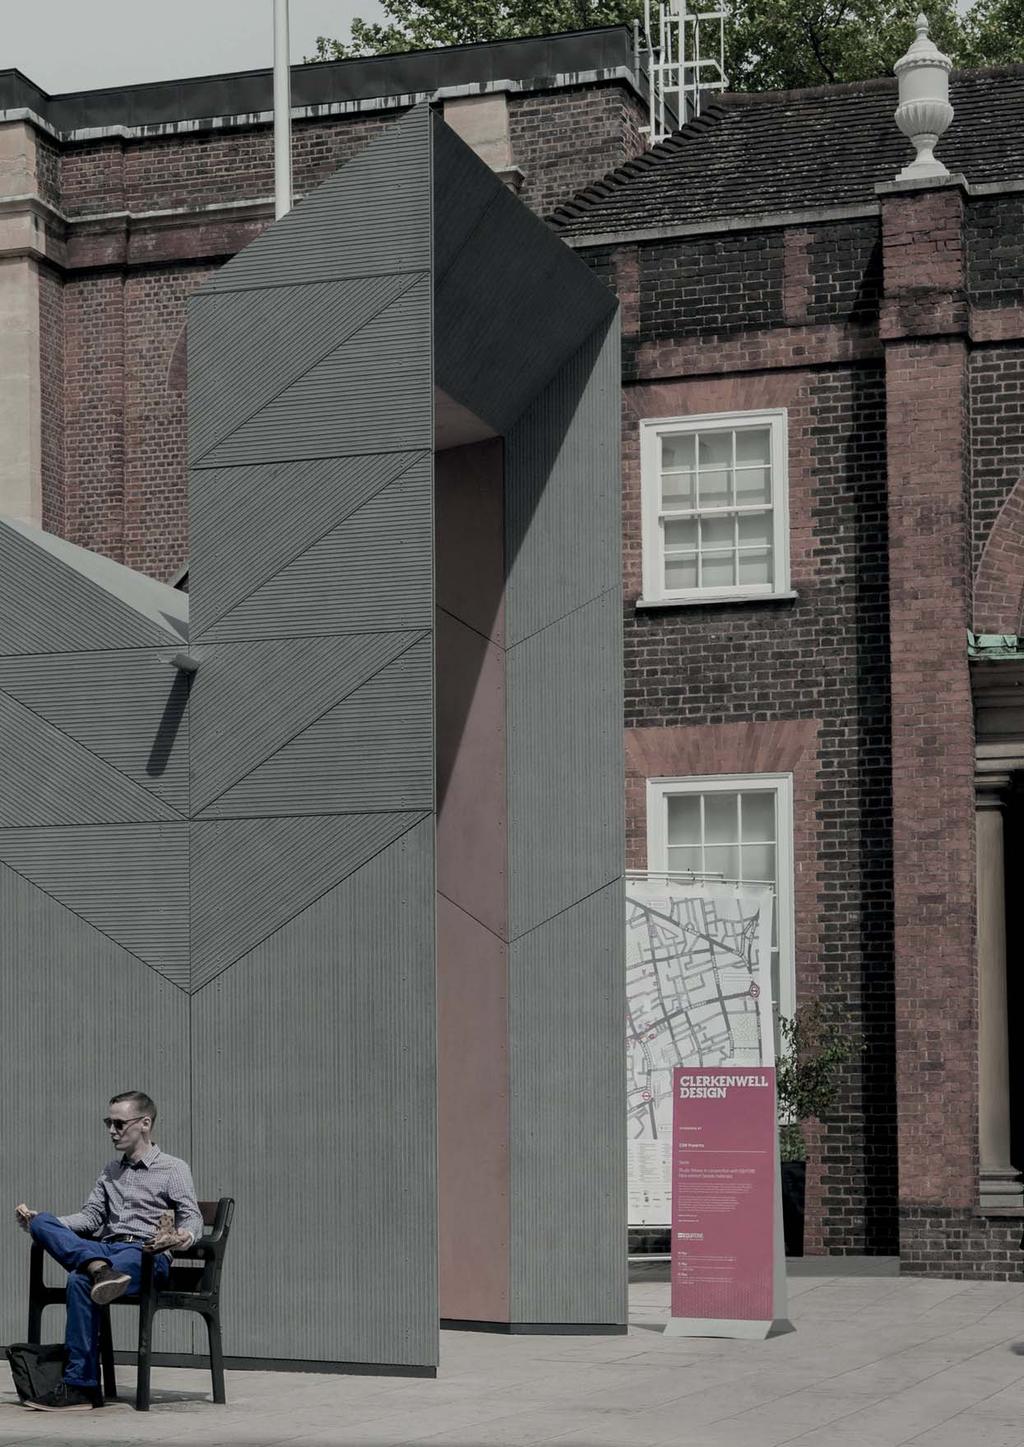 EQUITONE [linea] Clerkenewell Design Week